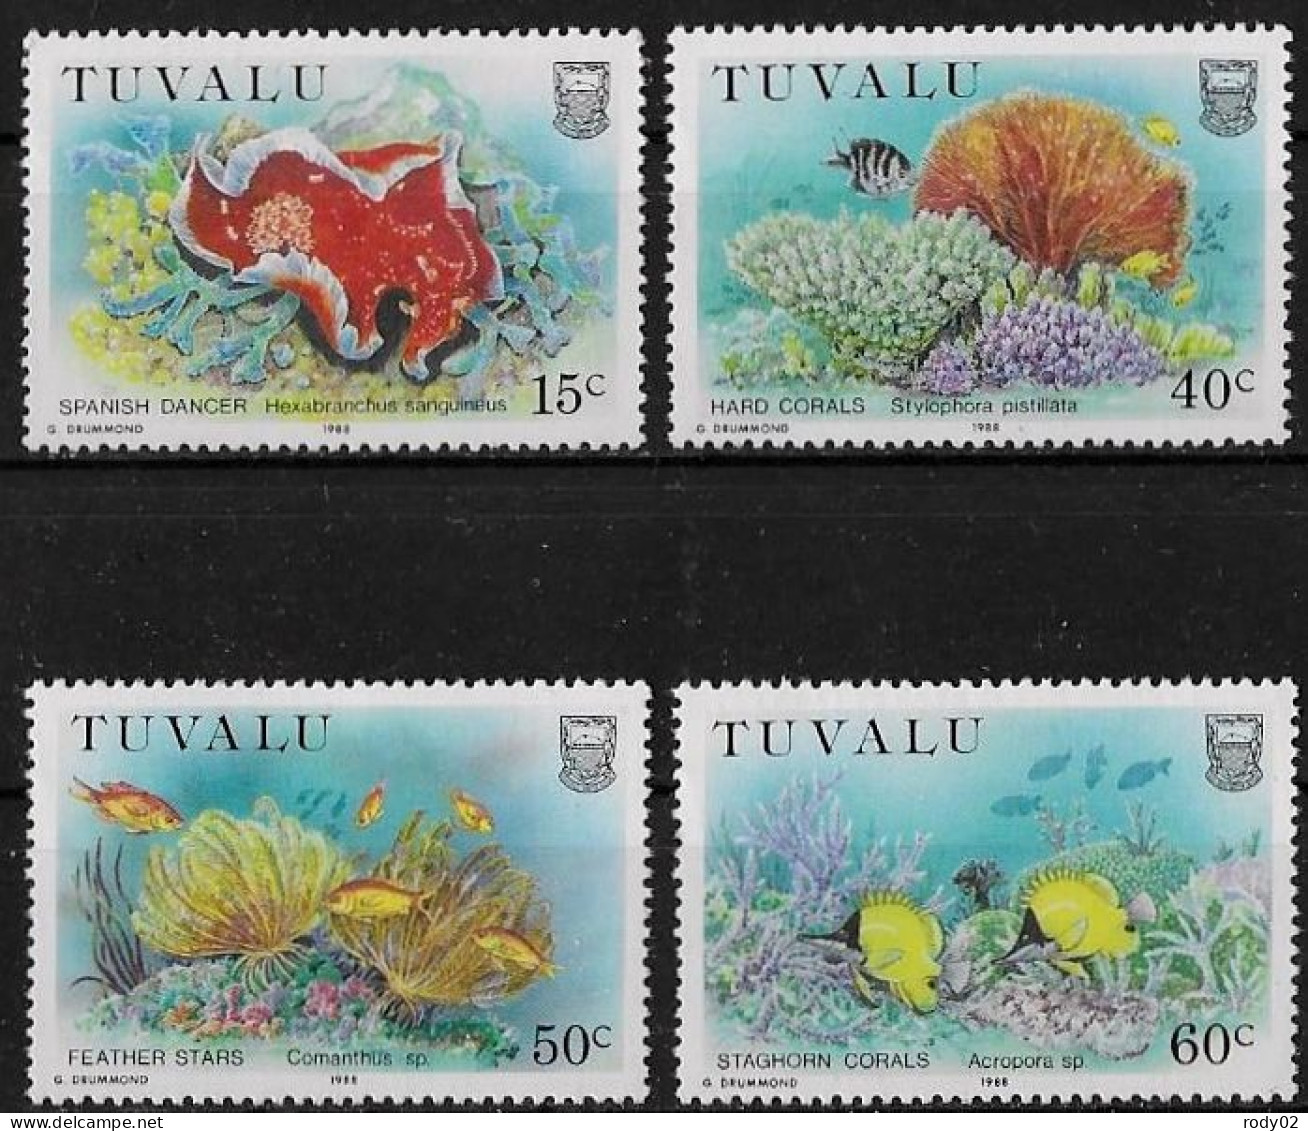 TUVALU - FAUNE AQUATIQUE - N° 400 A 403 ET BF 64 - NEUF** MNH - Marine Life